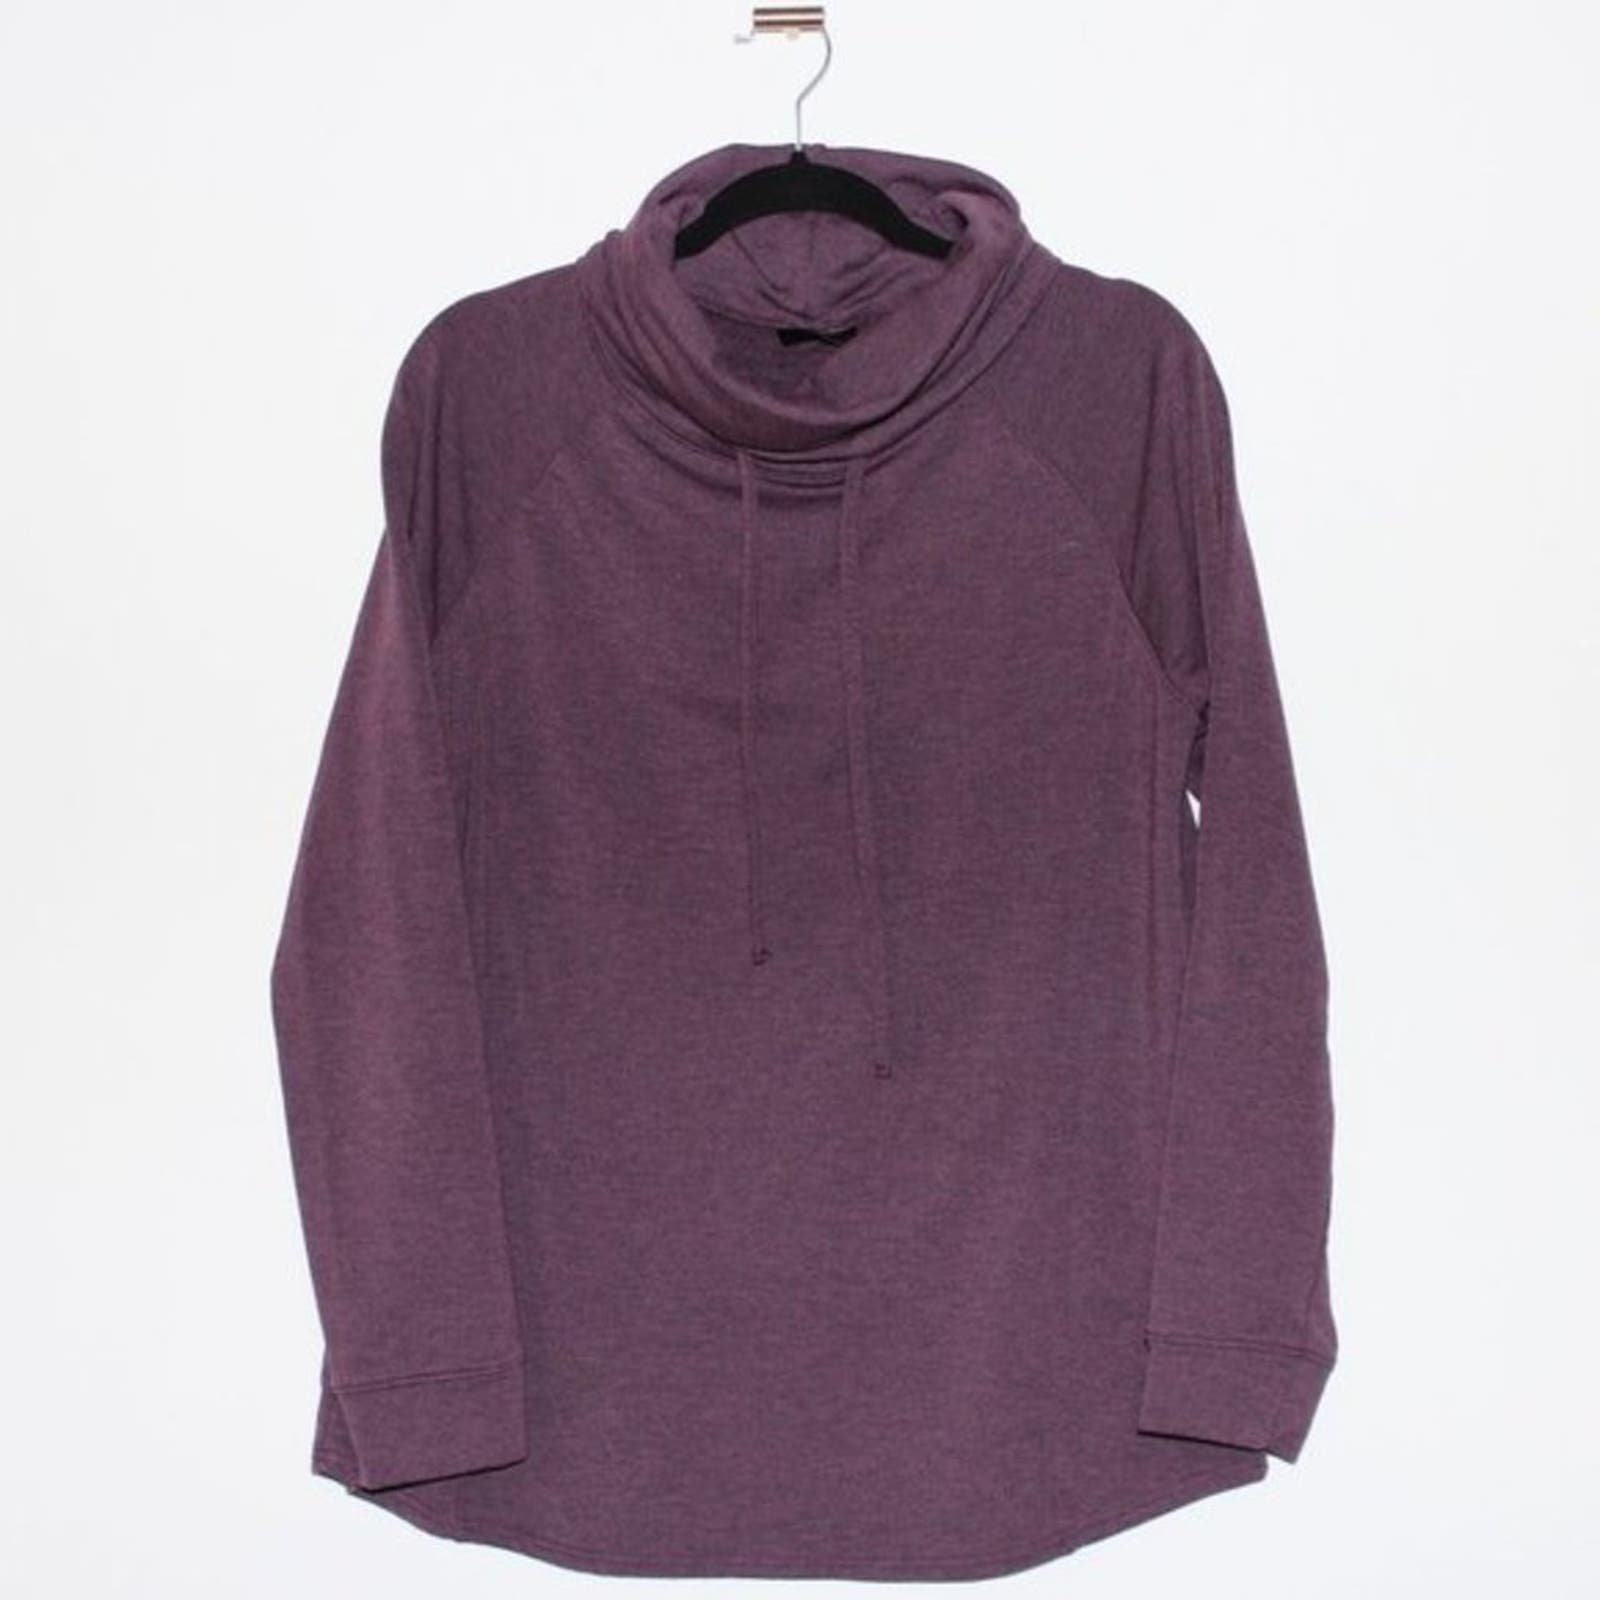 Comfortable Purple Long Sleeve Performance Sweatshirt S